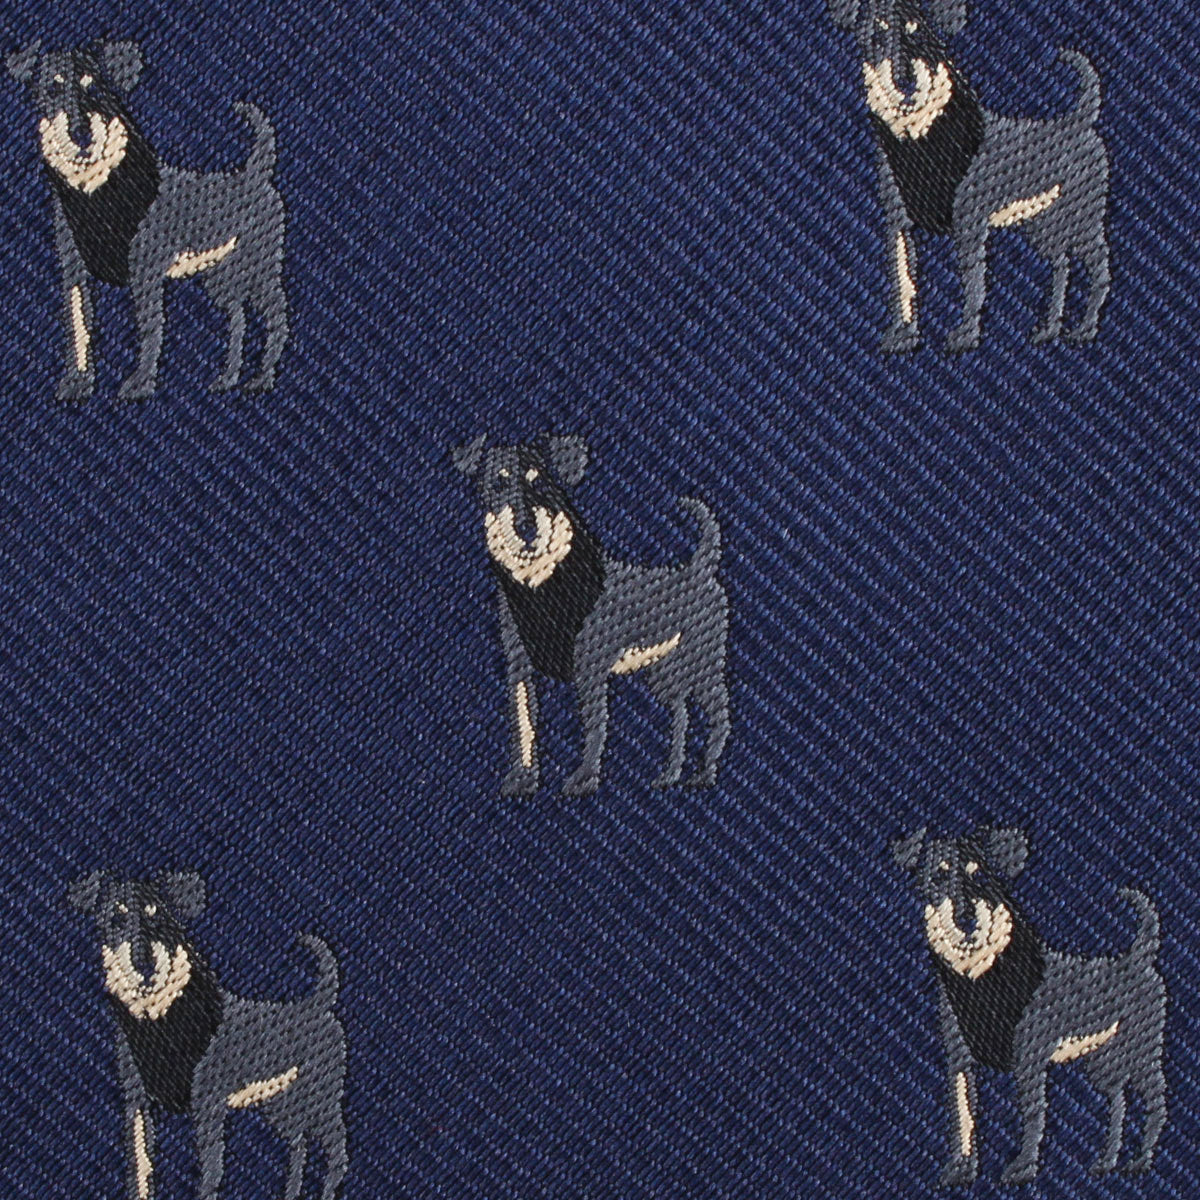 Rottweiler Dog Fabric Self Diamond Bowtie